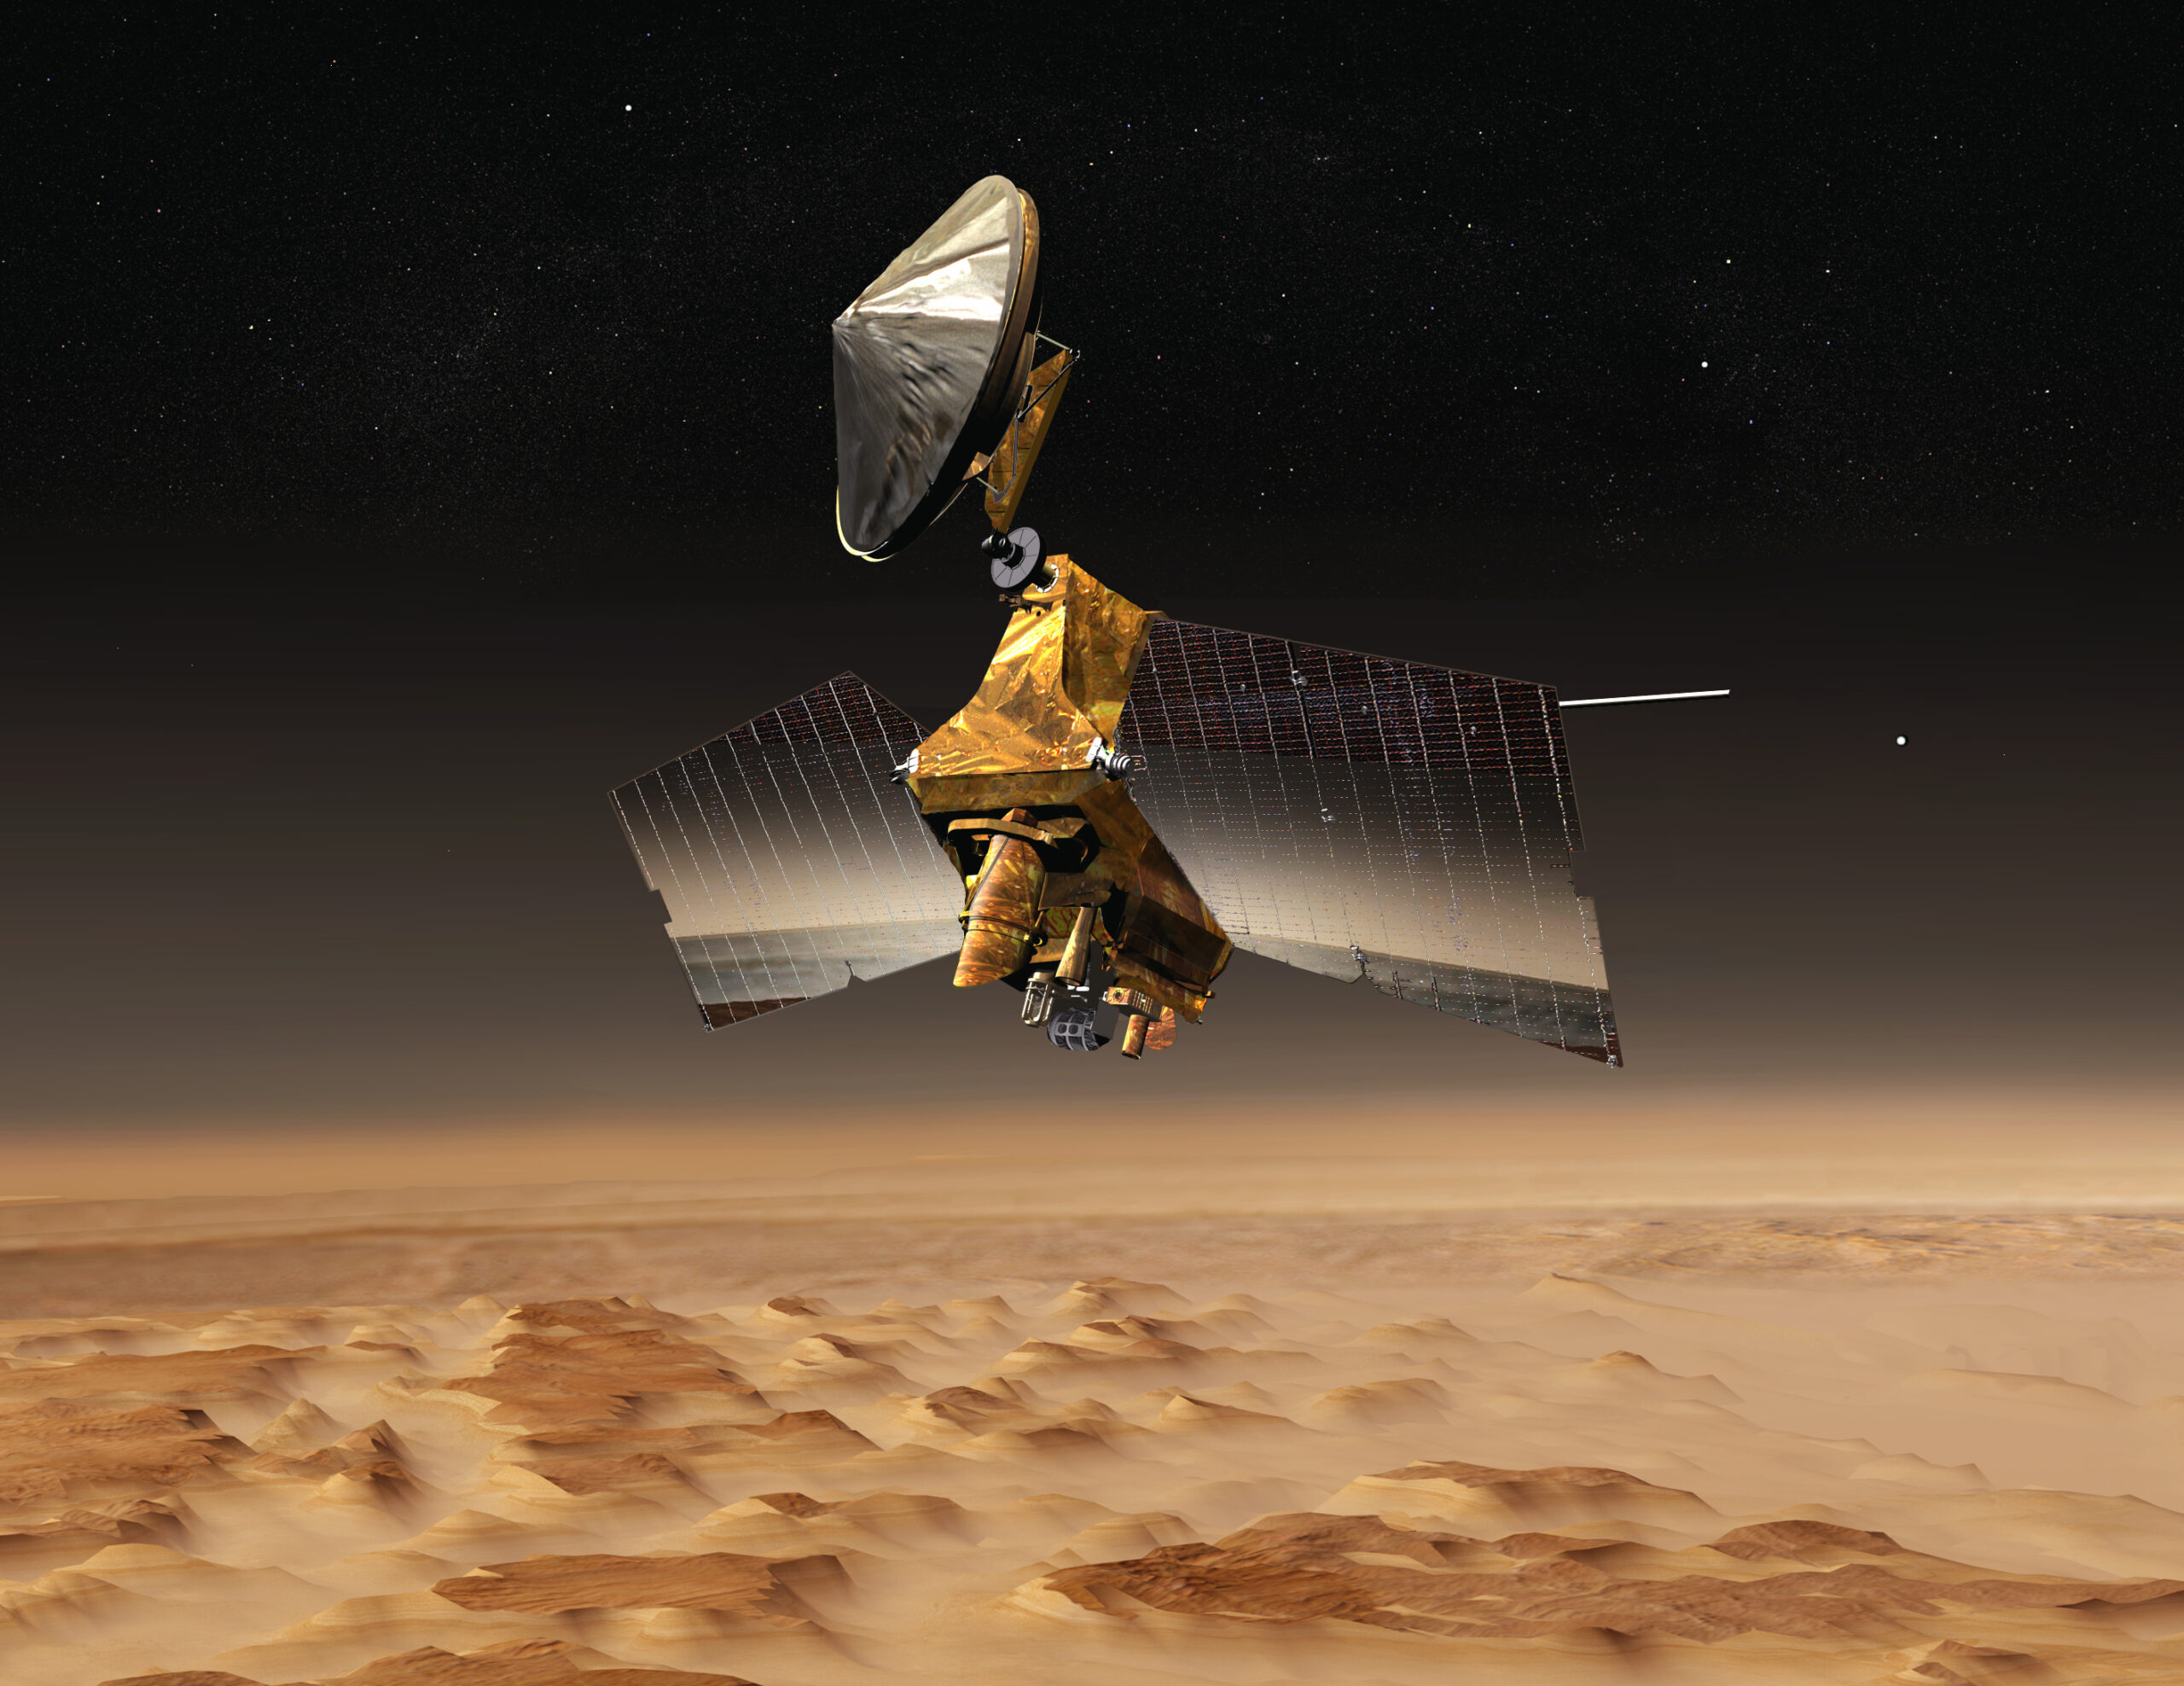 Artist's impression of the Mars Reconnaissance Orbiter spacecraft.